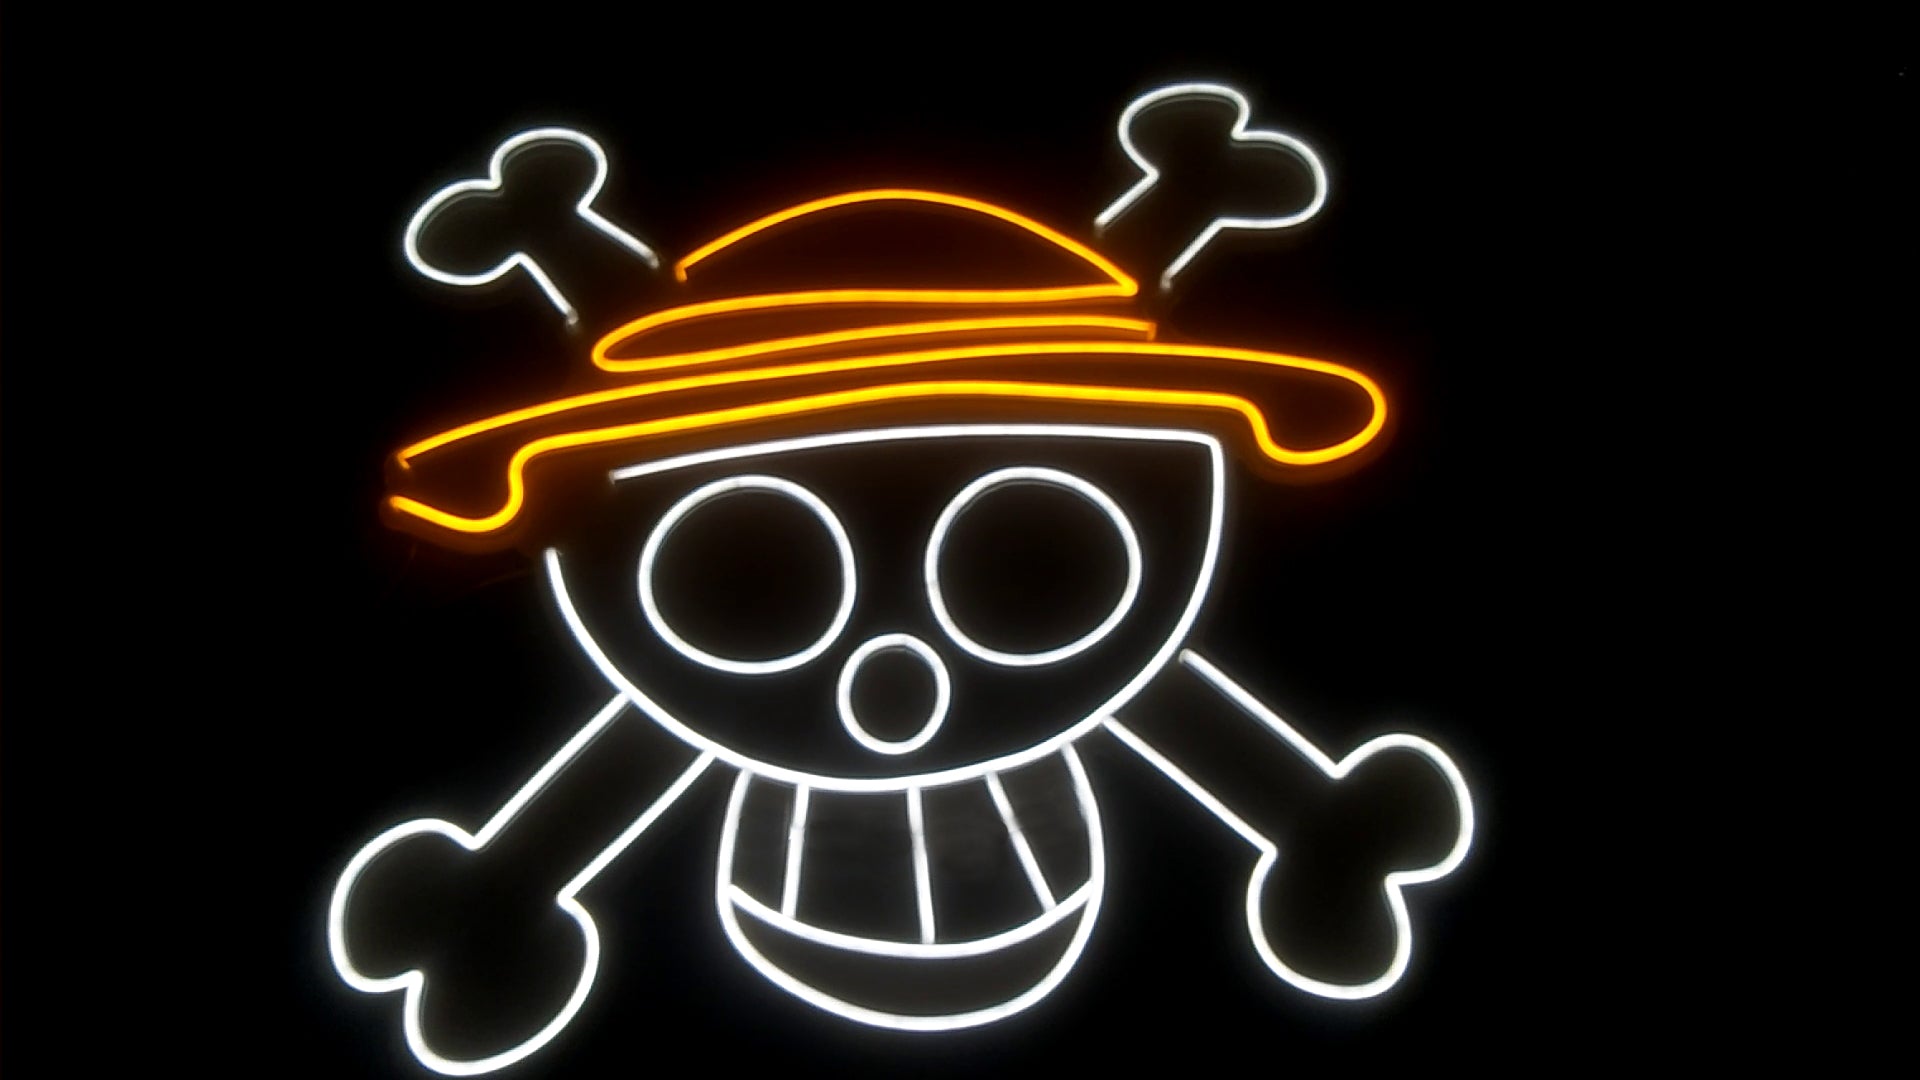 One Piece Whitebeard Pirates LED Neon Sign